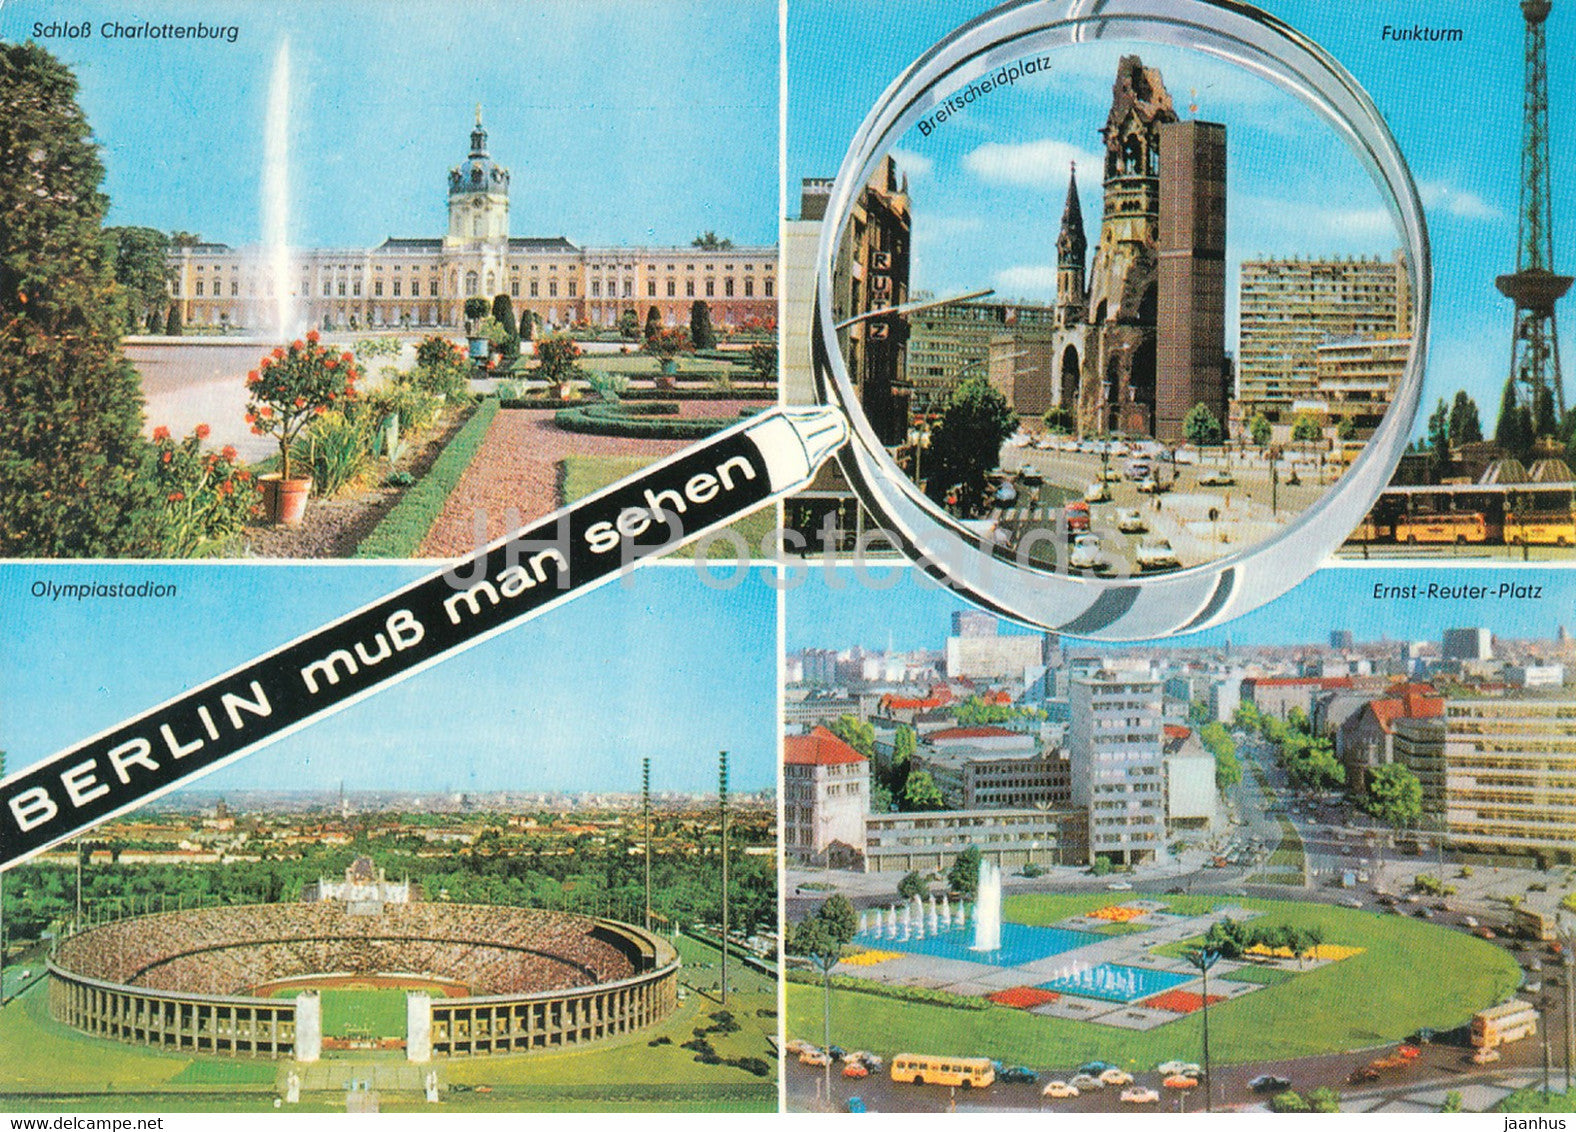 Berlin muss man sehen - Charlottenburg - Funkturm - Olympiastadion - Ernst Reuter Platz - Germany - unused - JH Postcards